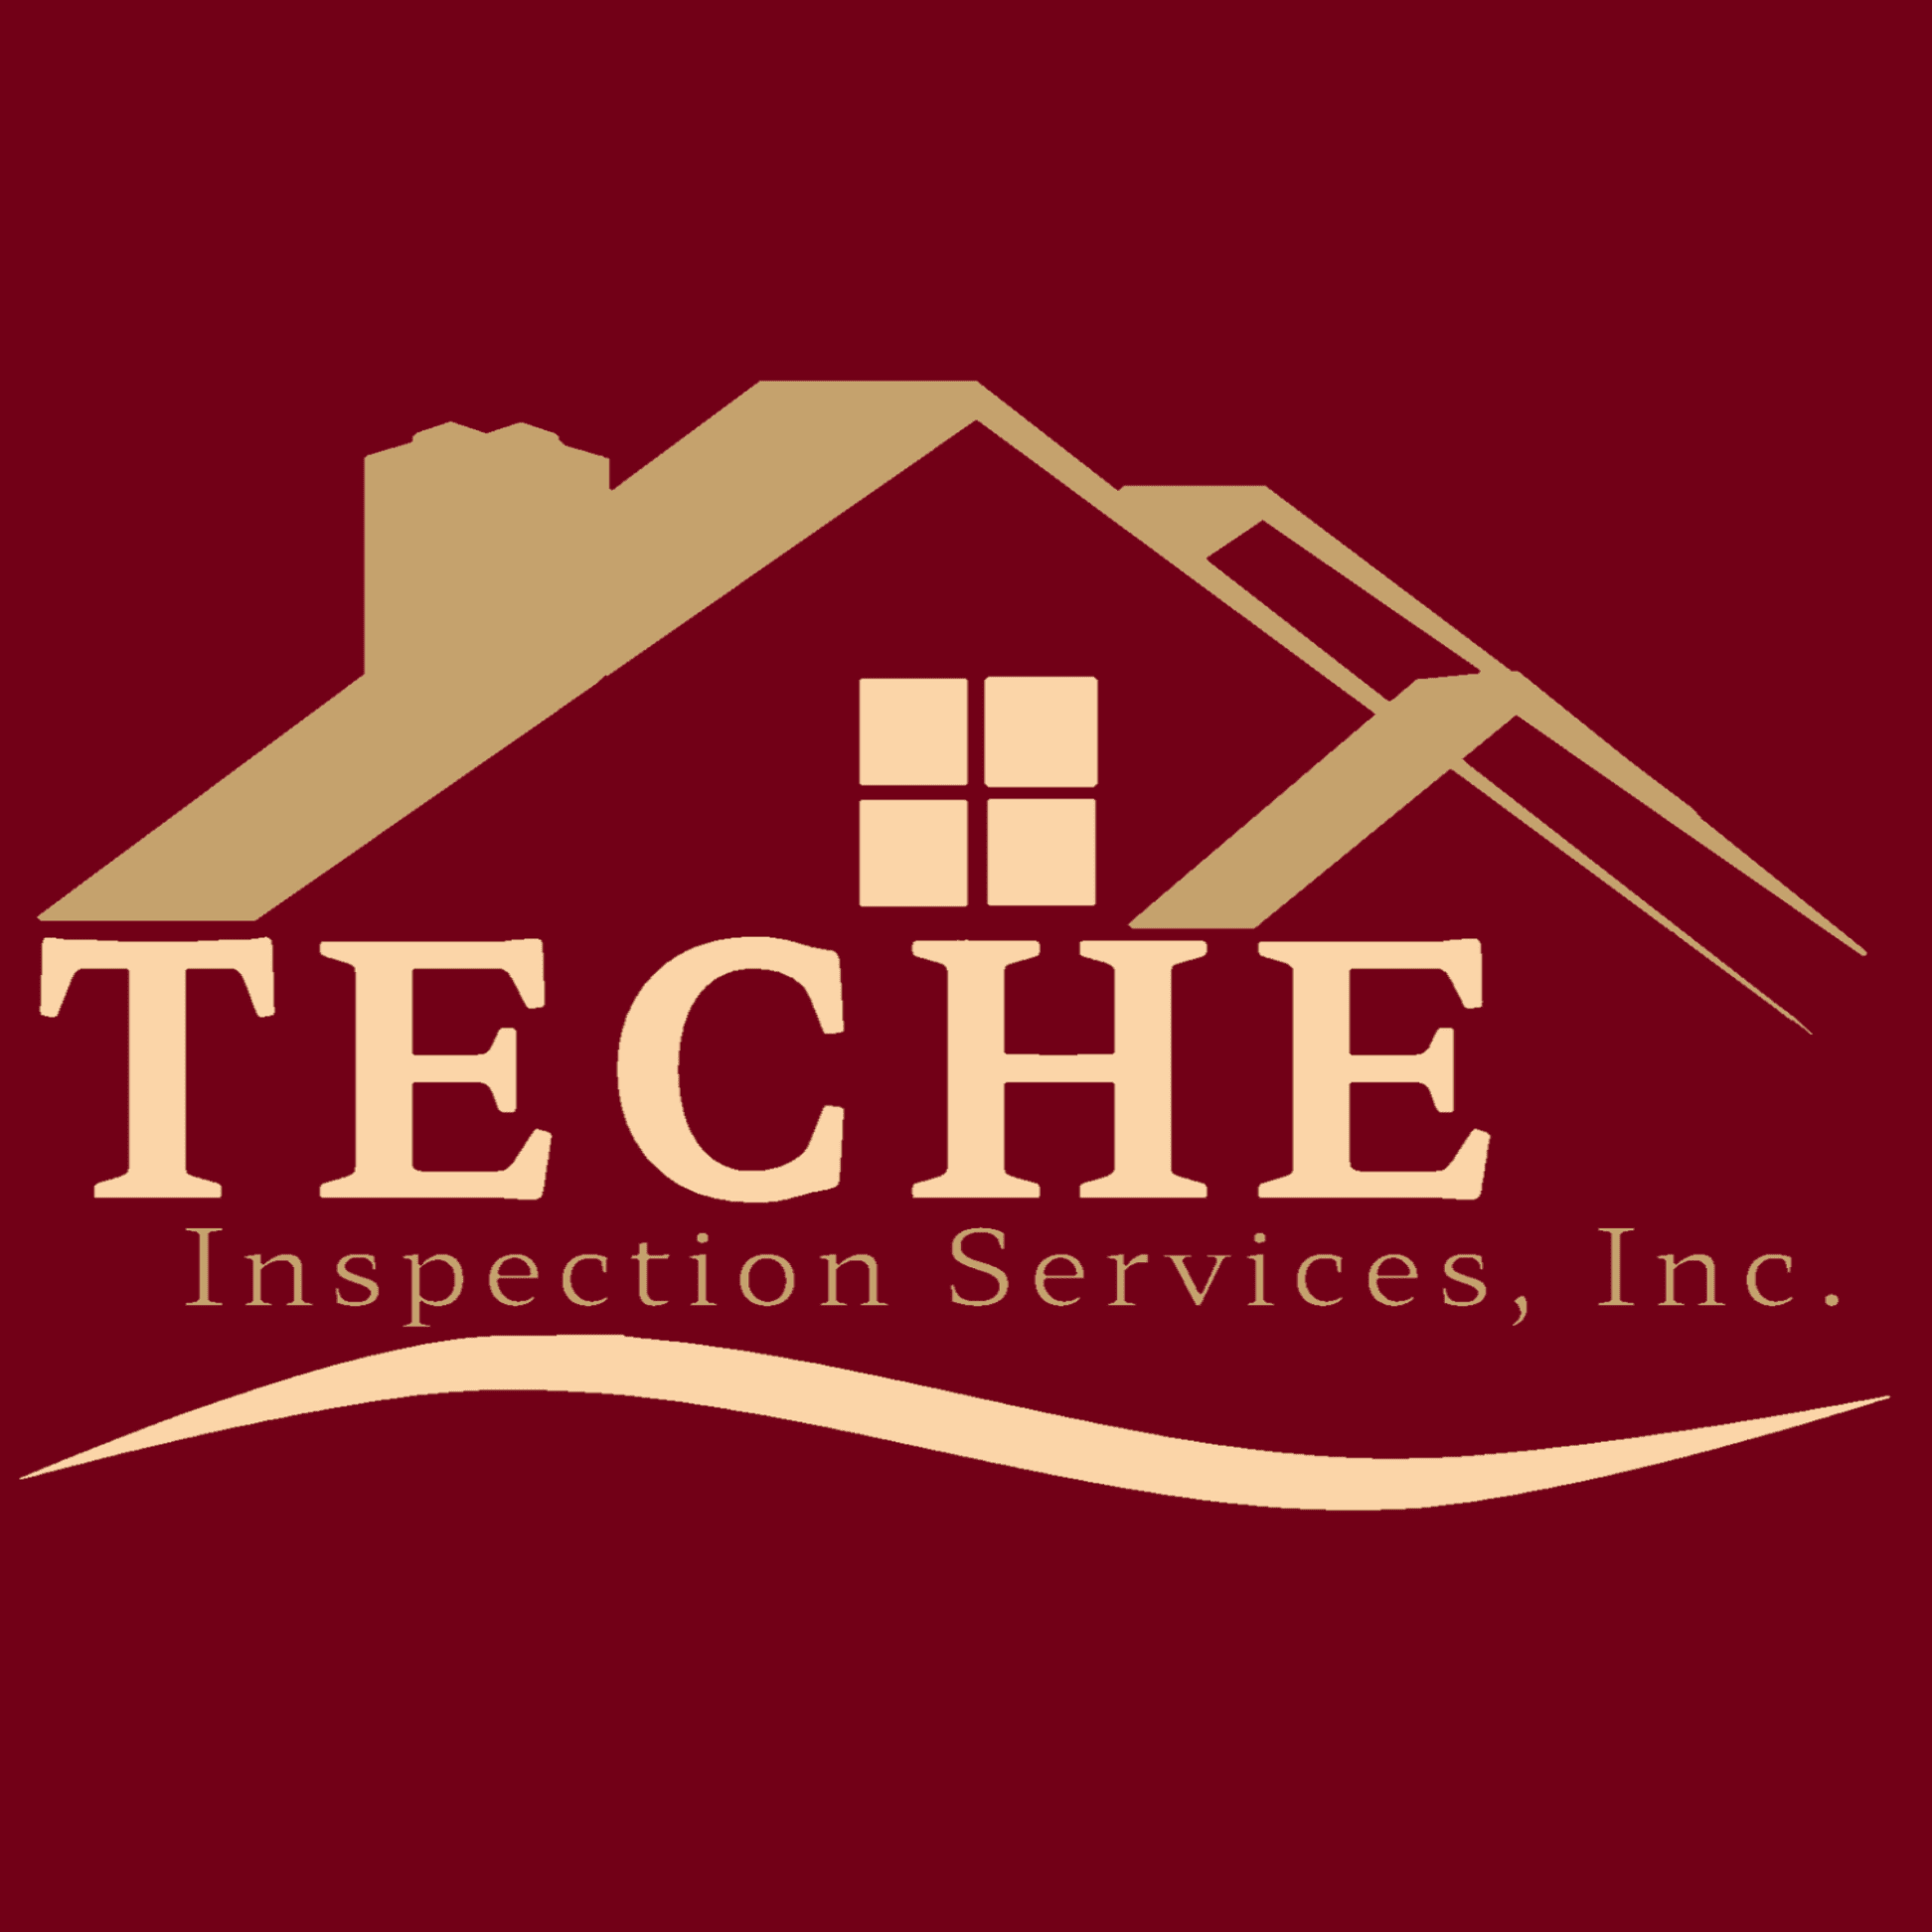 TECHE Inspection Services, Inc. Logo